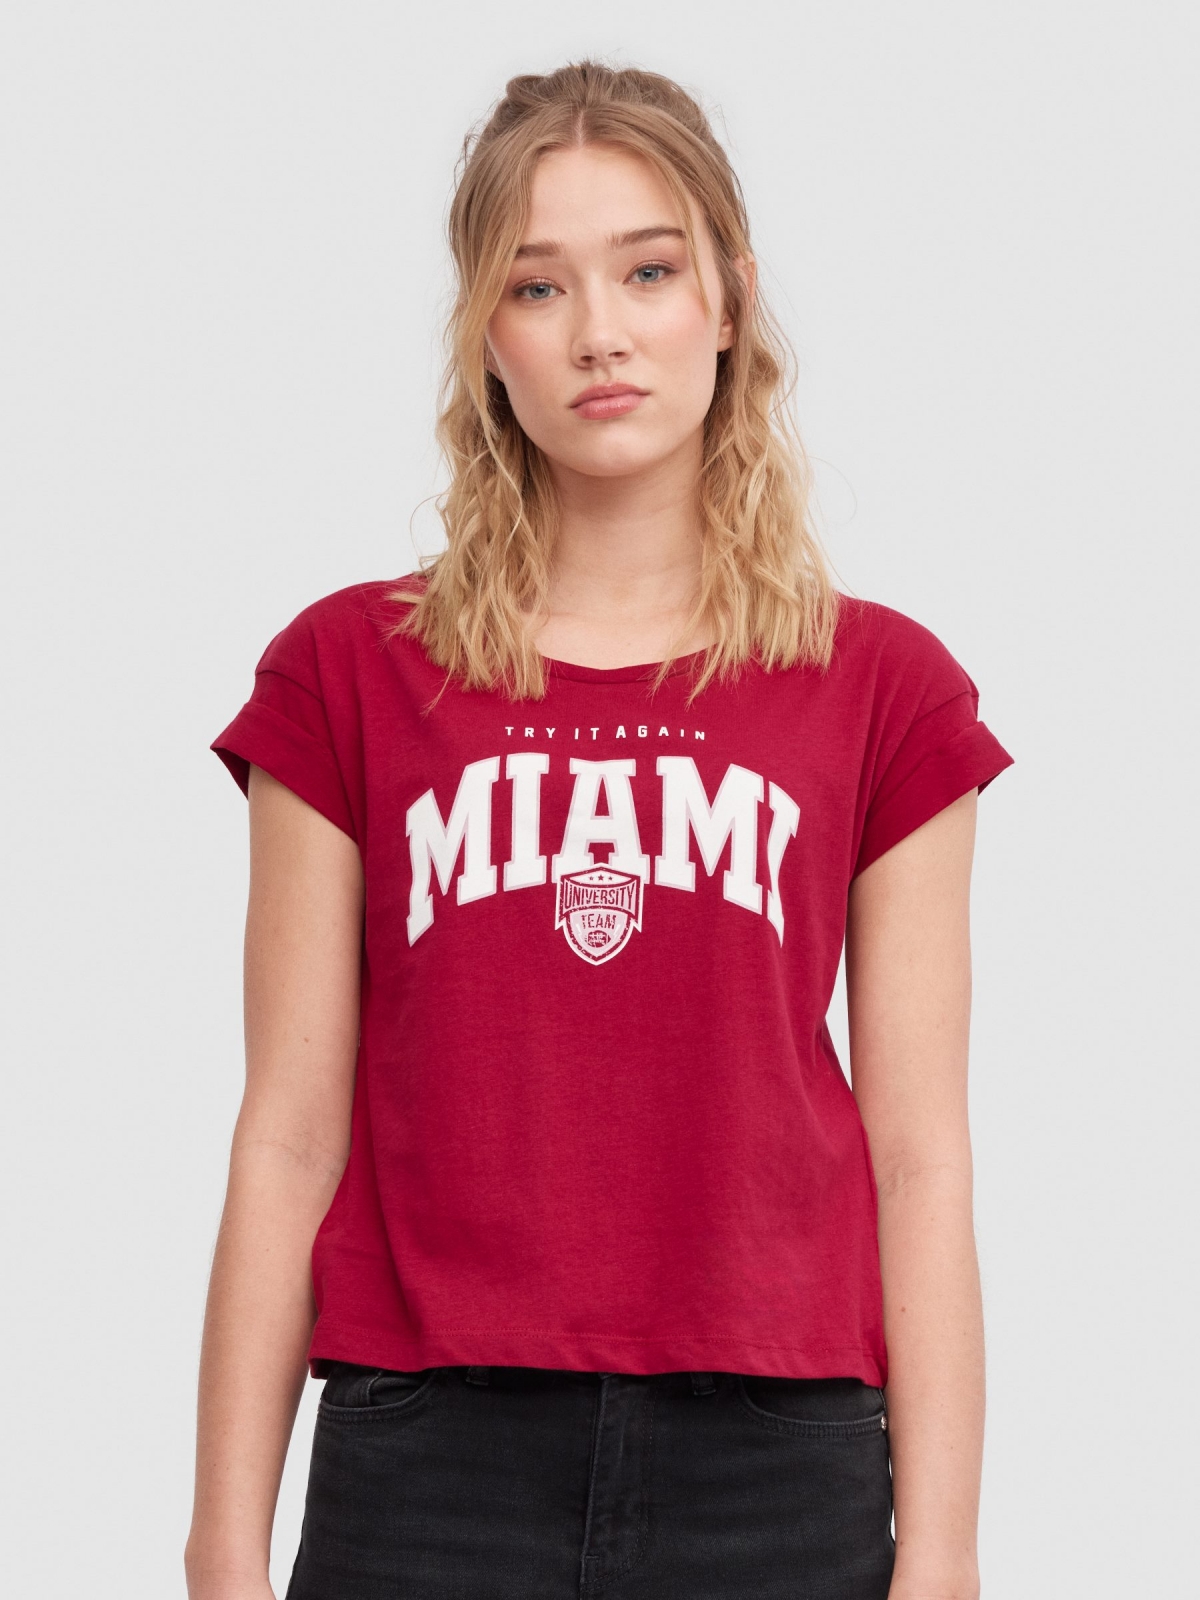 T-shirt Universidade de Miami granada vista meia frontal